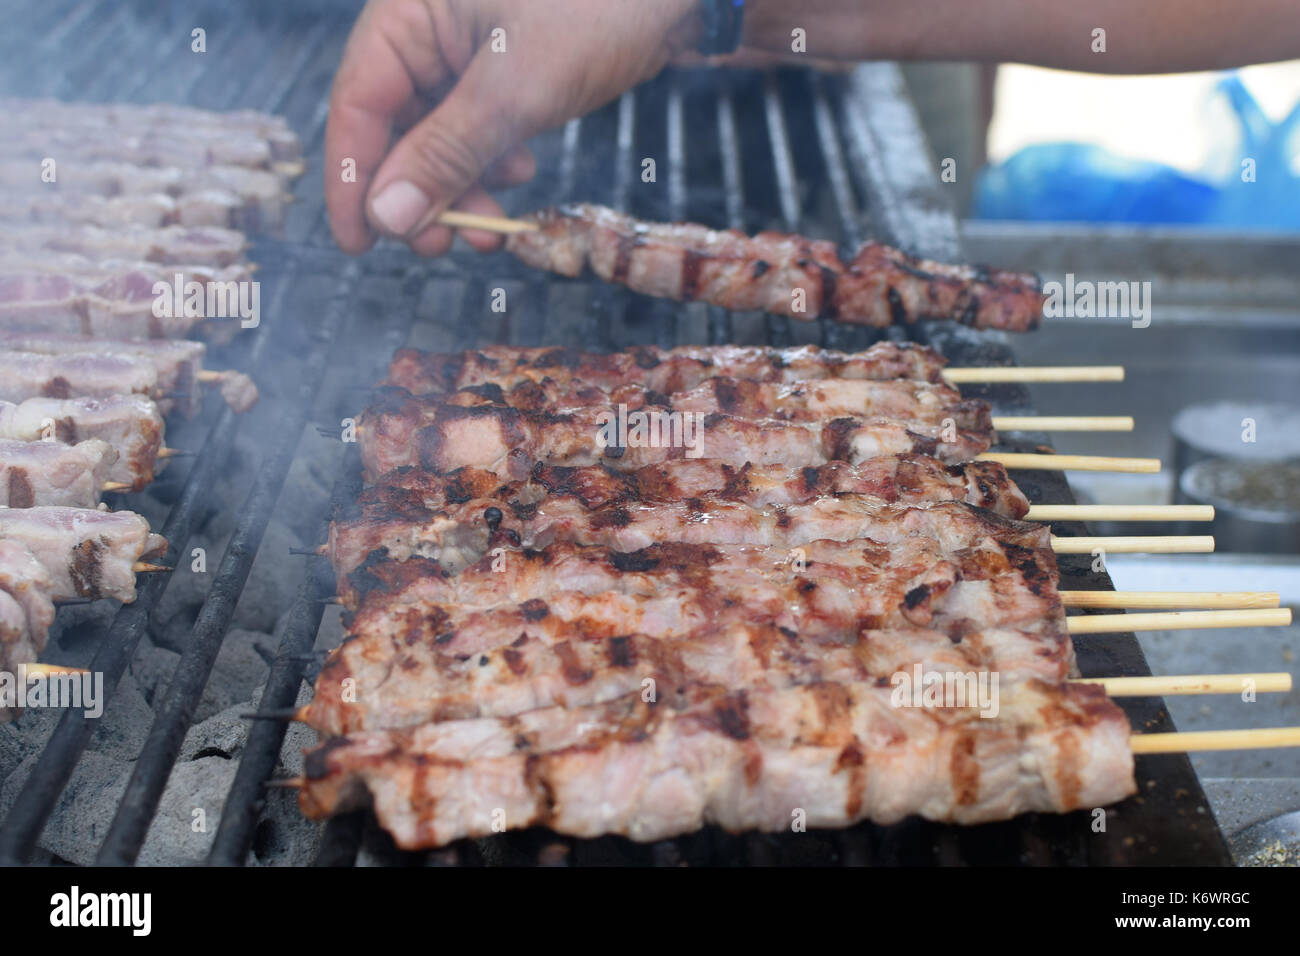 Man roasting souvlaki meat skewers on hot grill. Stock Photo